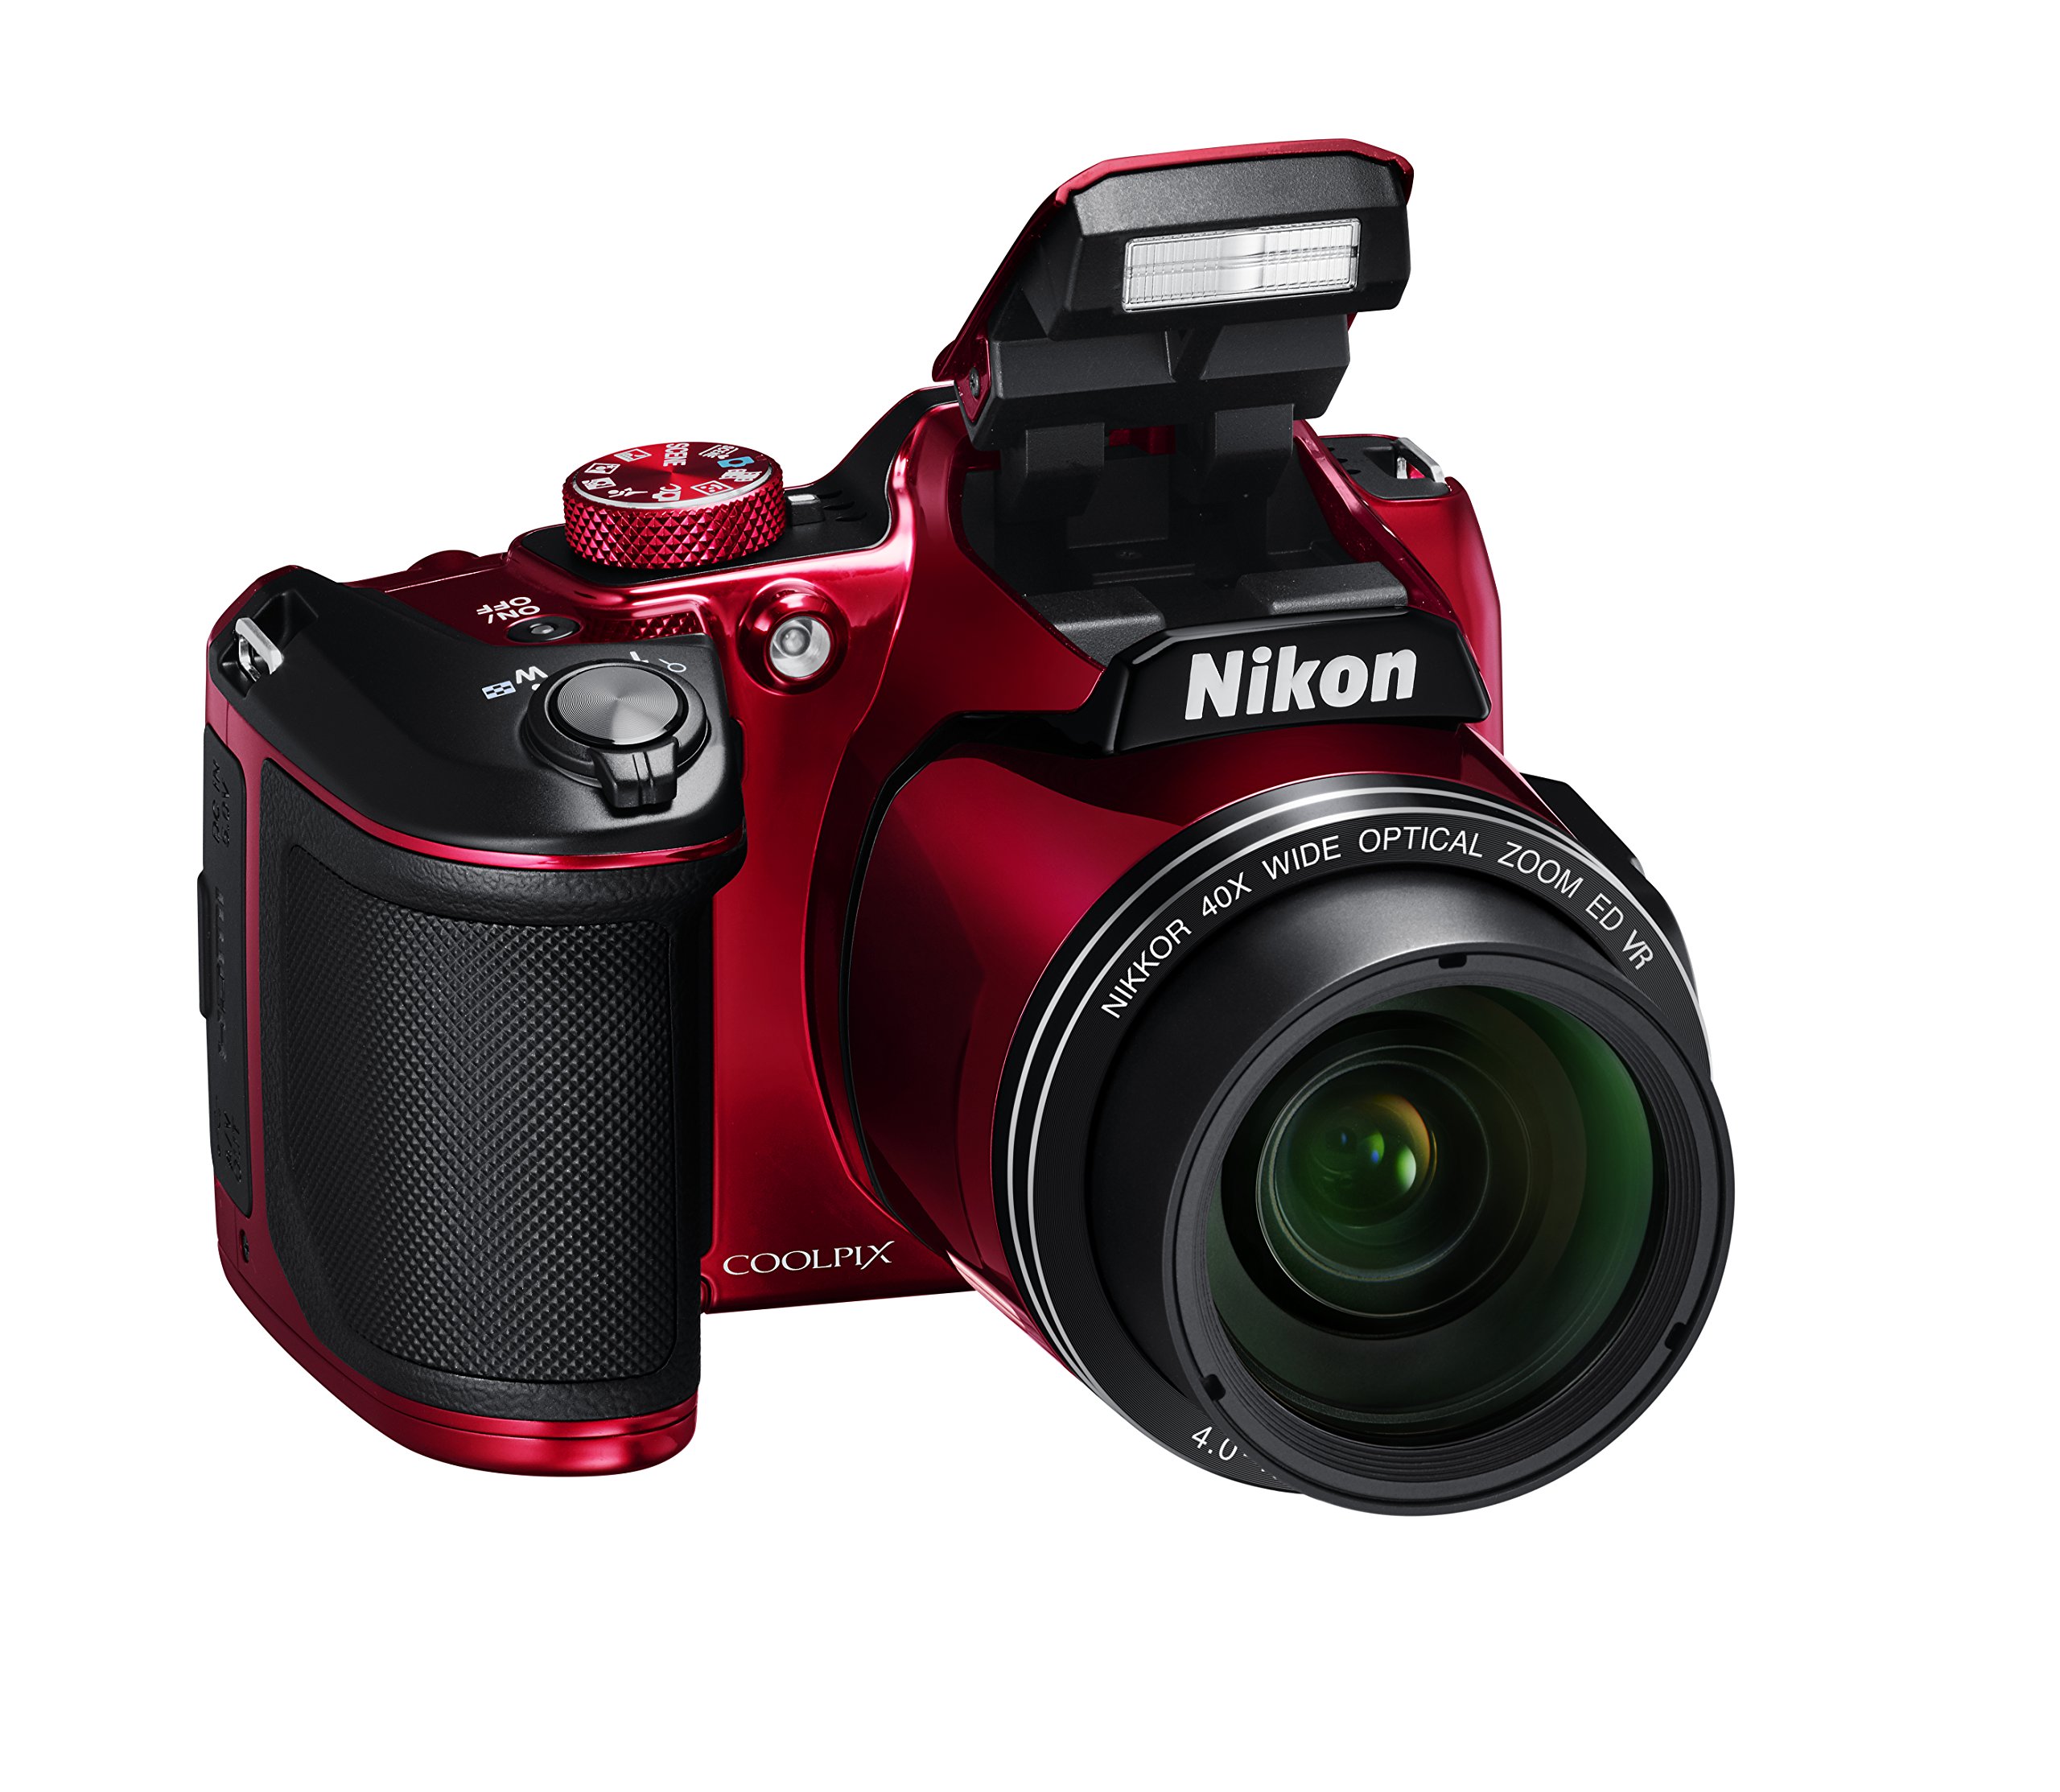 Nikon COOLPIX B500 Digital Camera (Red)